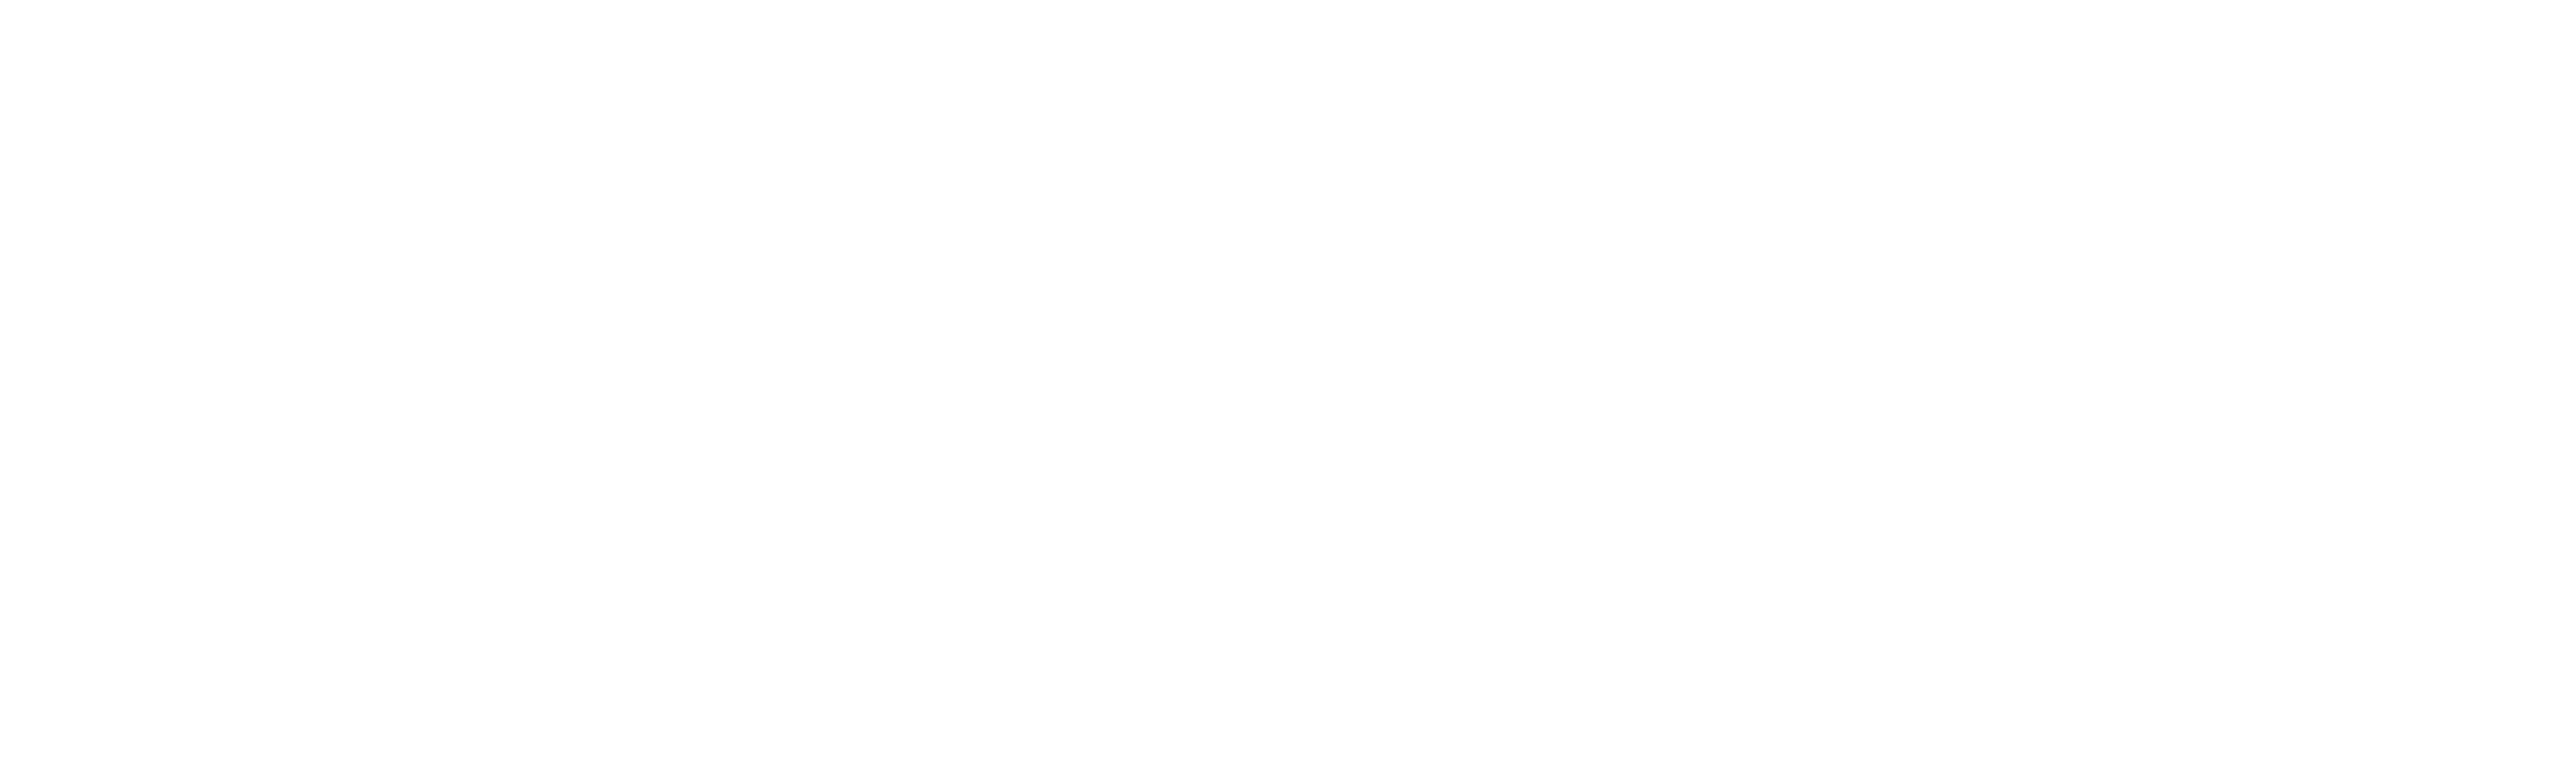 CogniFit Logo Brain Training Programs